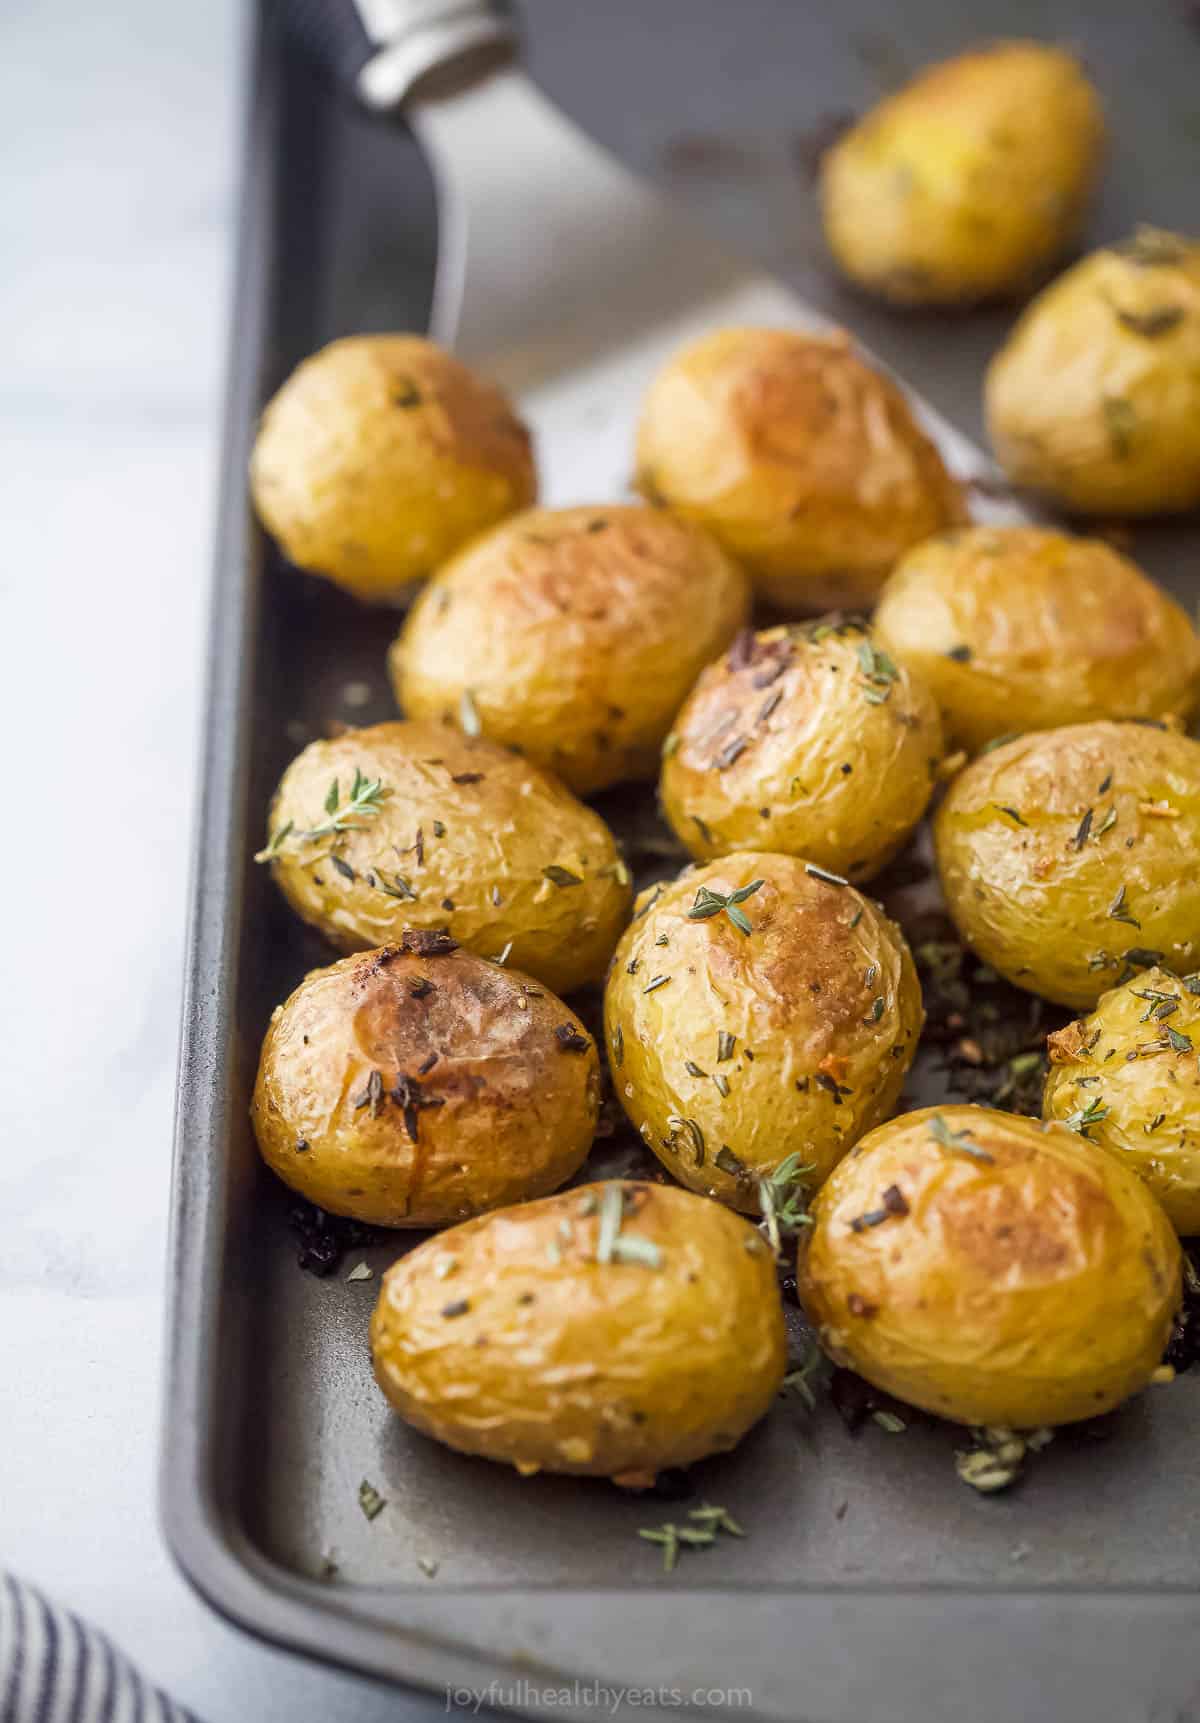 A close-up shot of crispy oven-baked garlic herb potatoes on a metal baking sheet